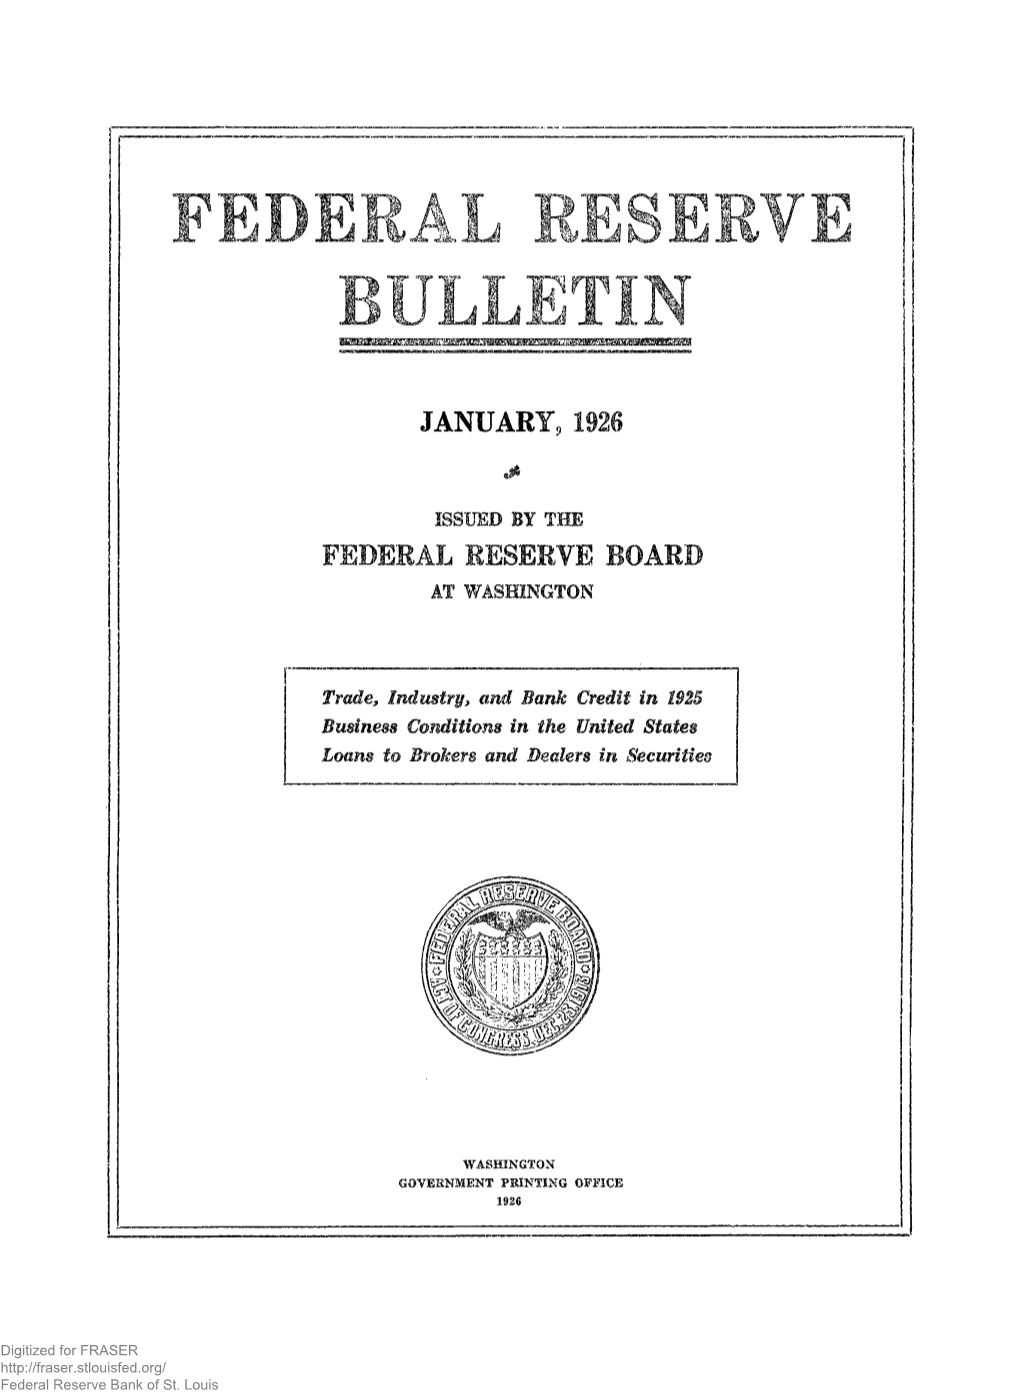 Federal Reserve Bulletin January 1926